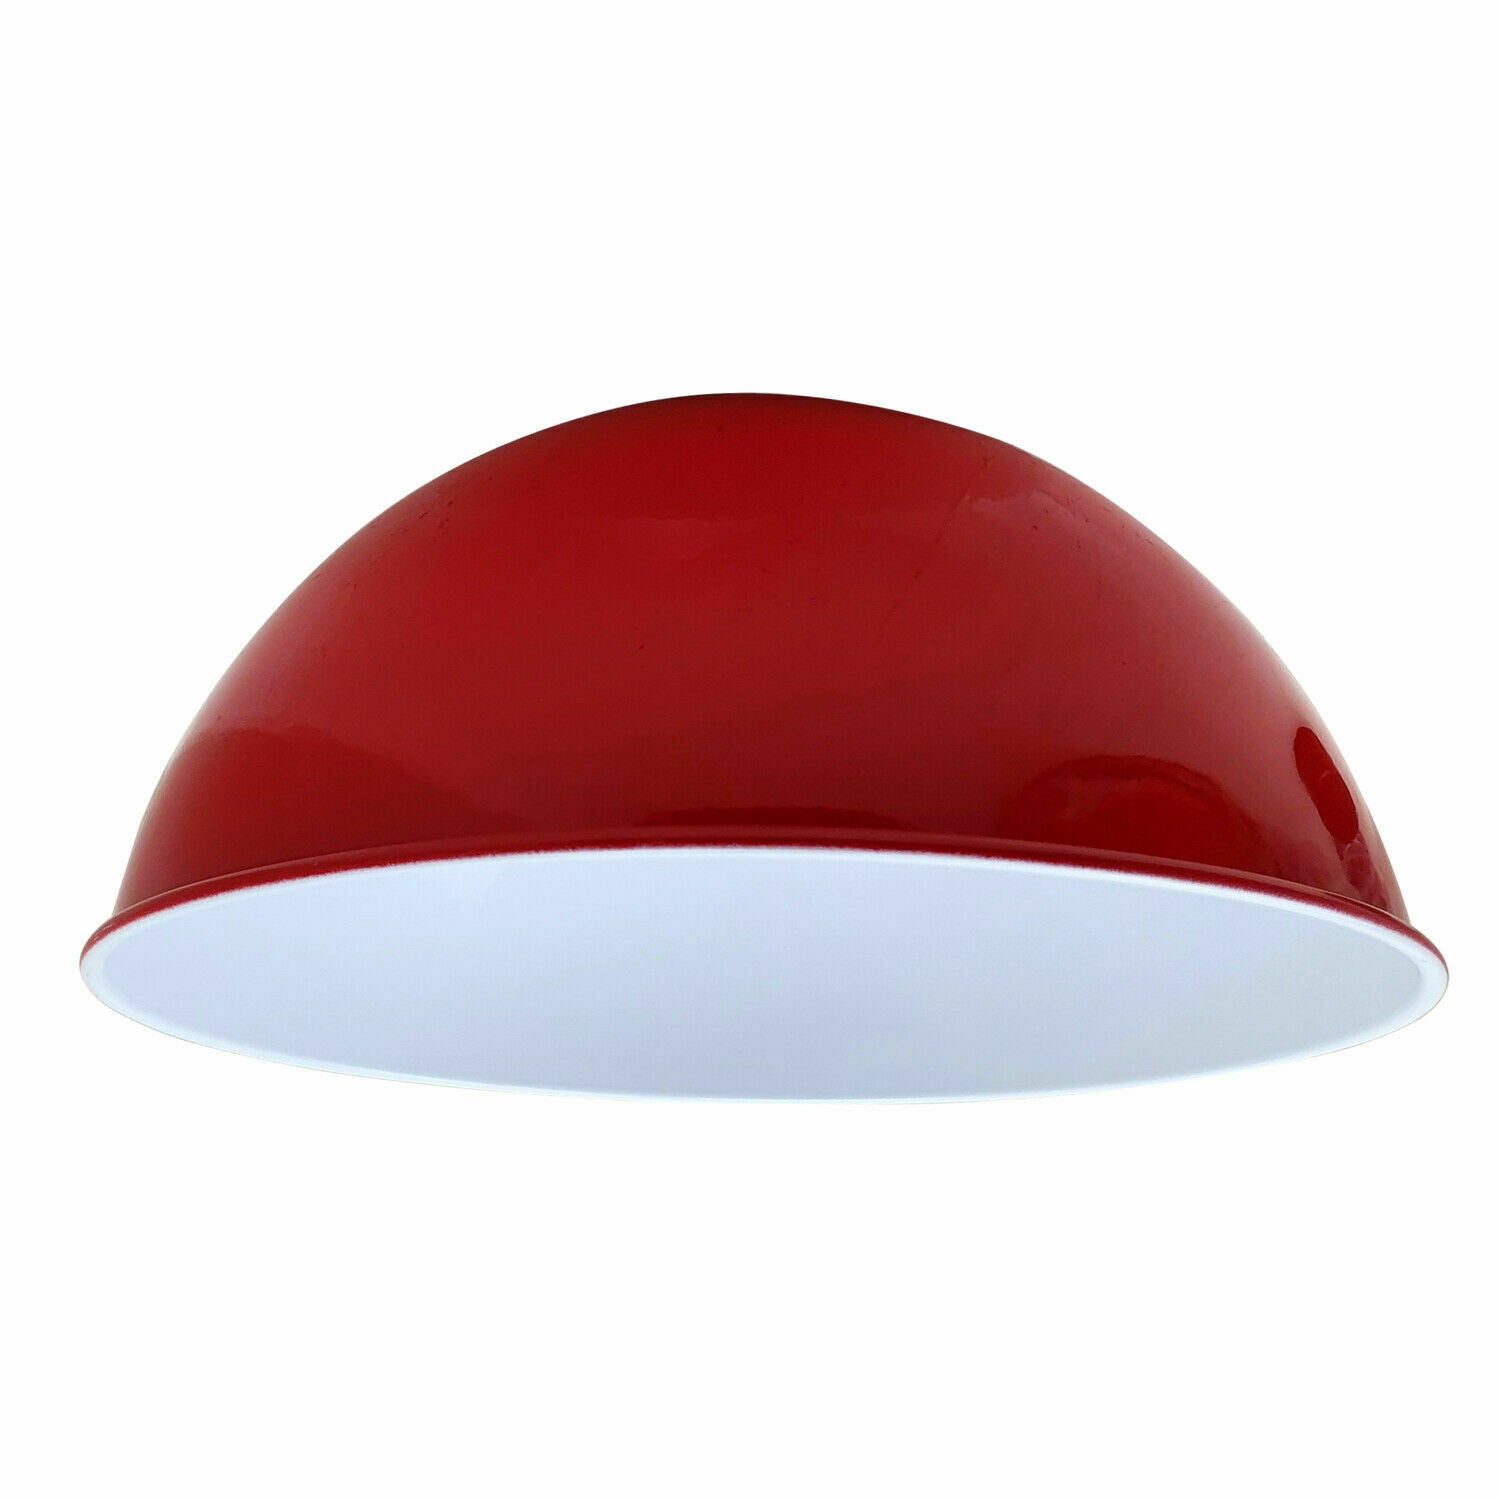 metal lamp shades red